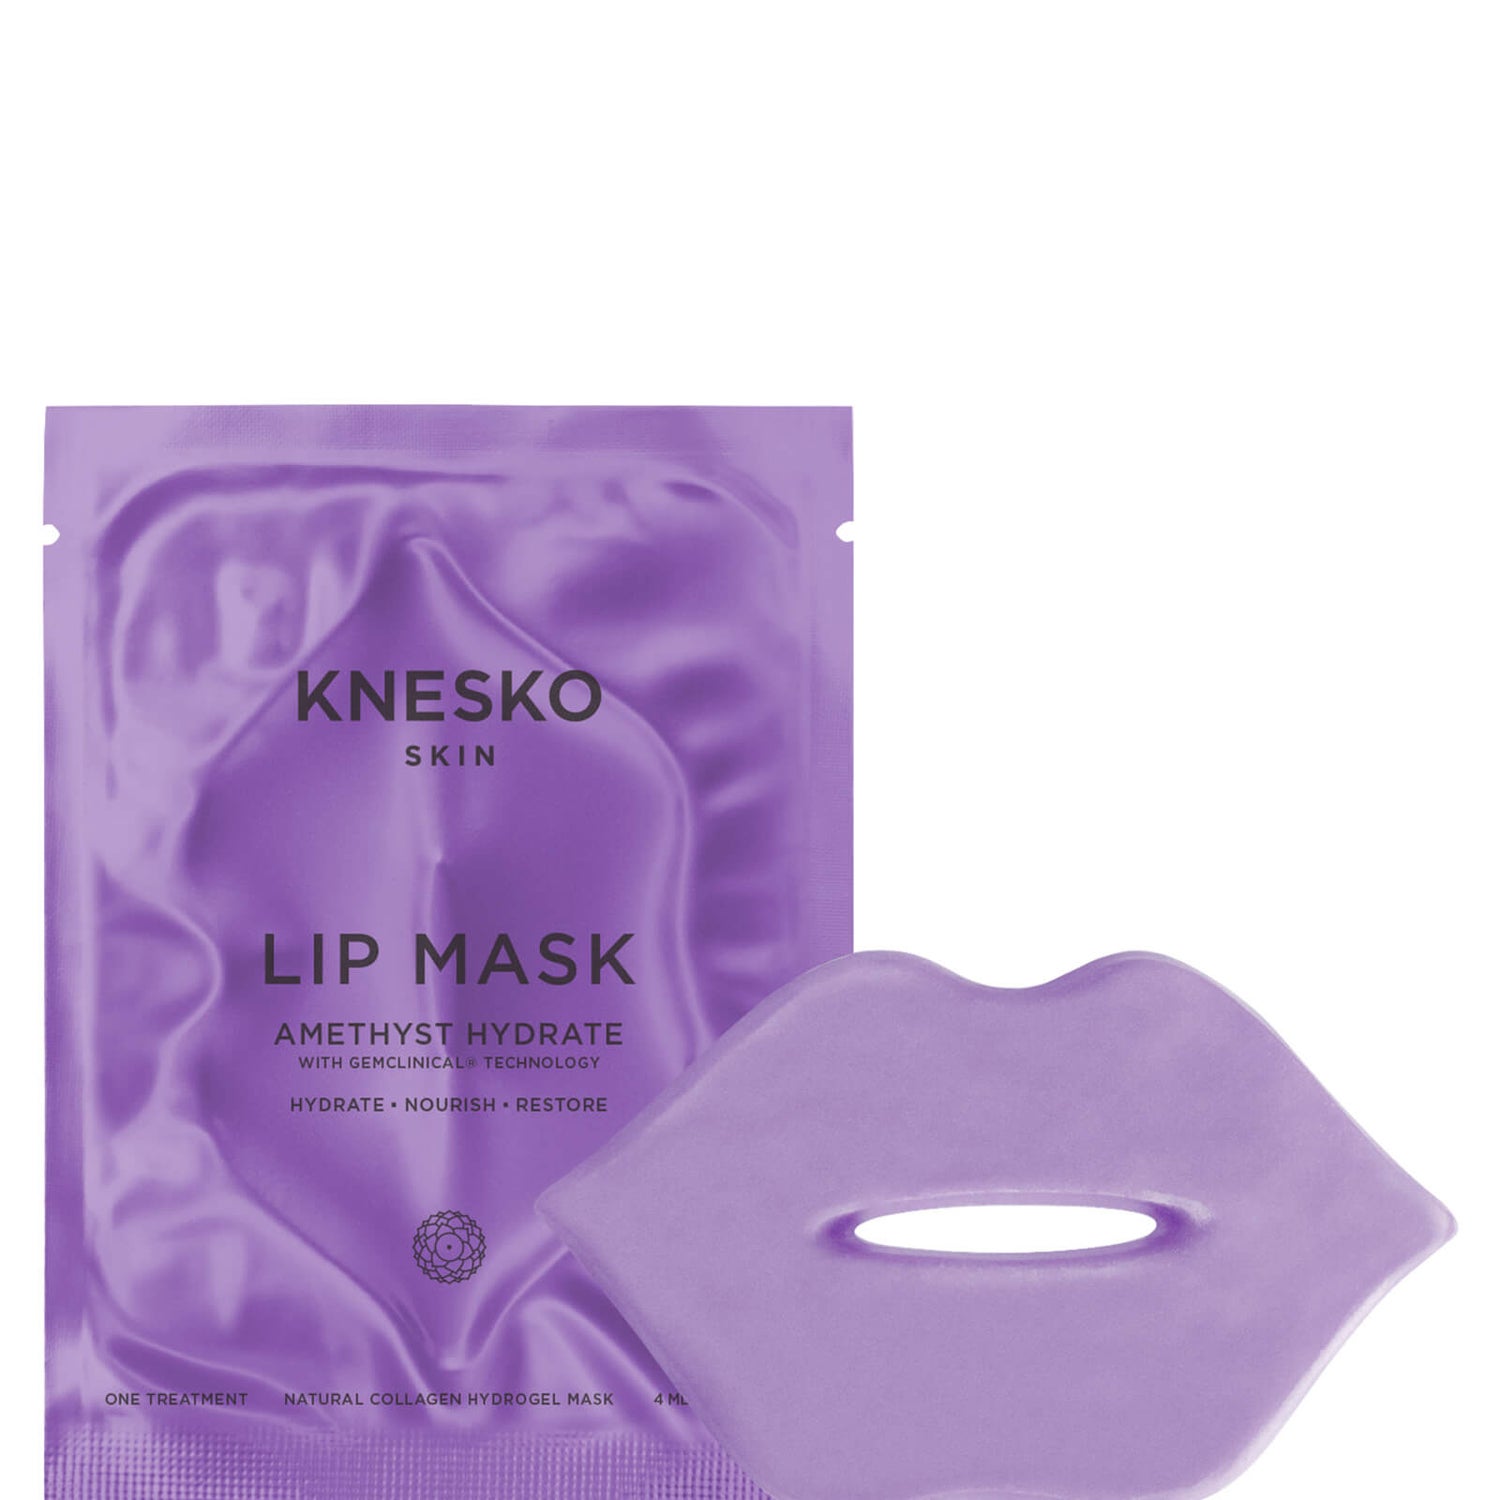 Knesko Skin Amethyst Hydrate Lip Mask (Single Treatment)